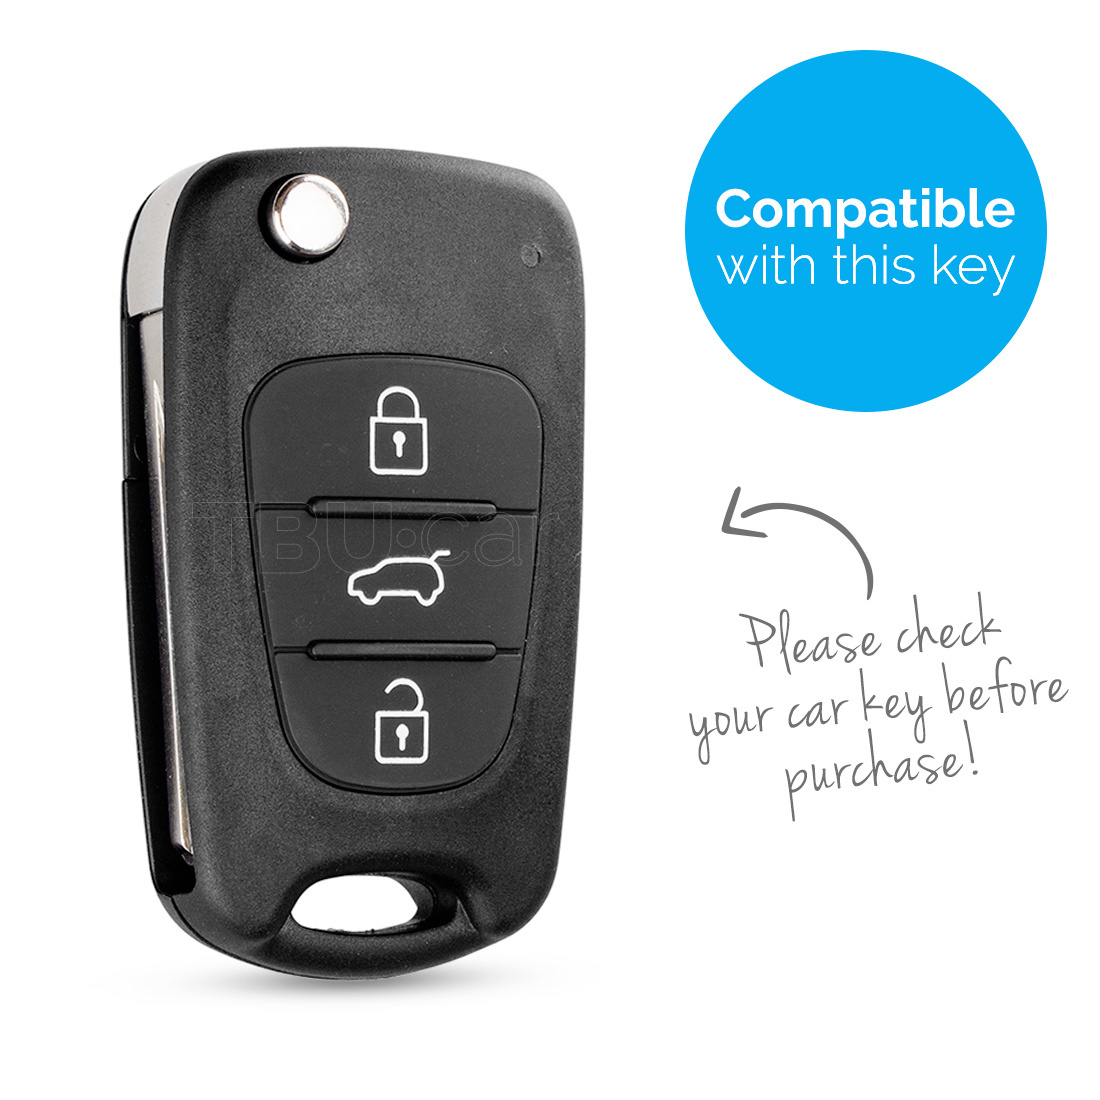 TBU car TBU car Sleutel cover compatibel met Kia - TPU sleutel hoesje / beschermhoesje autosleutel - Goud